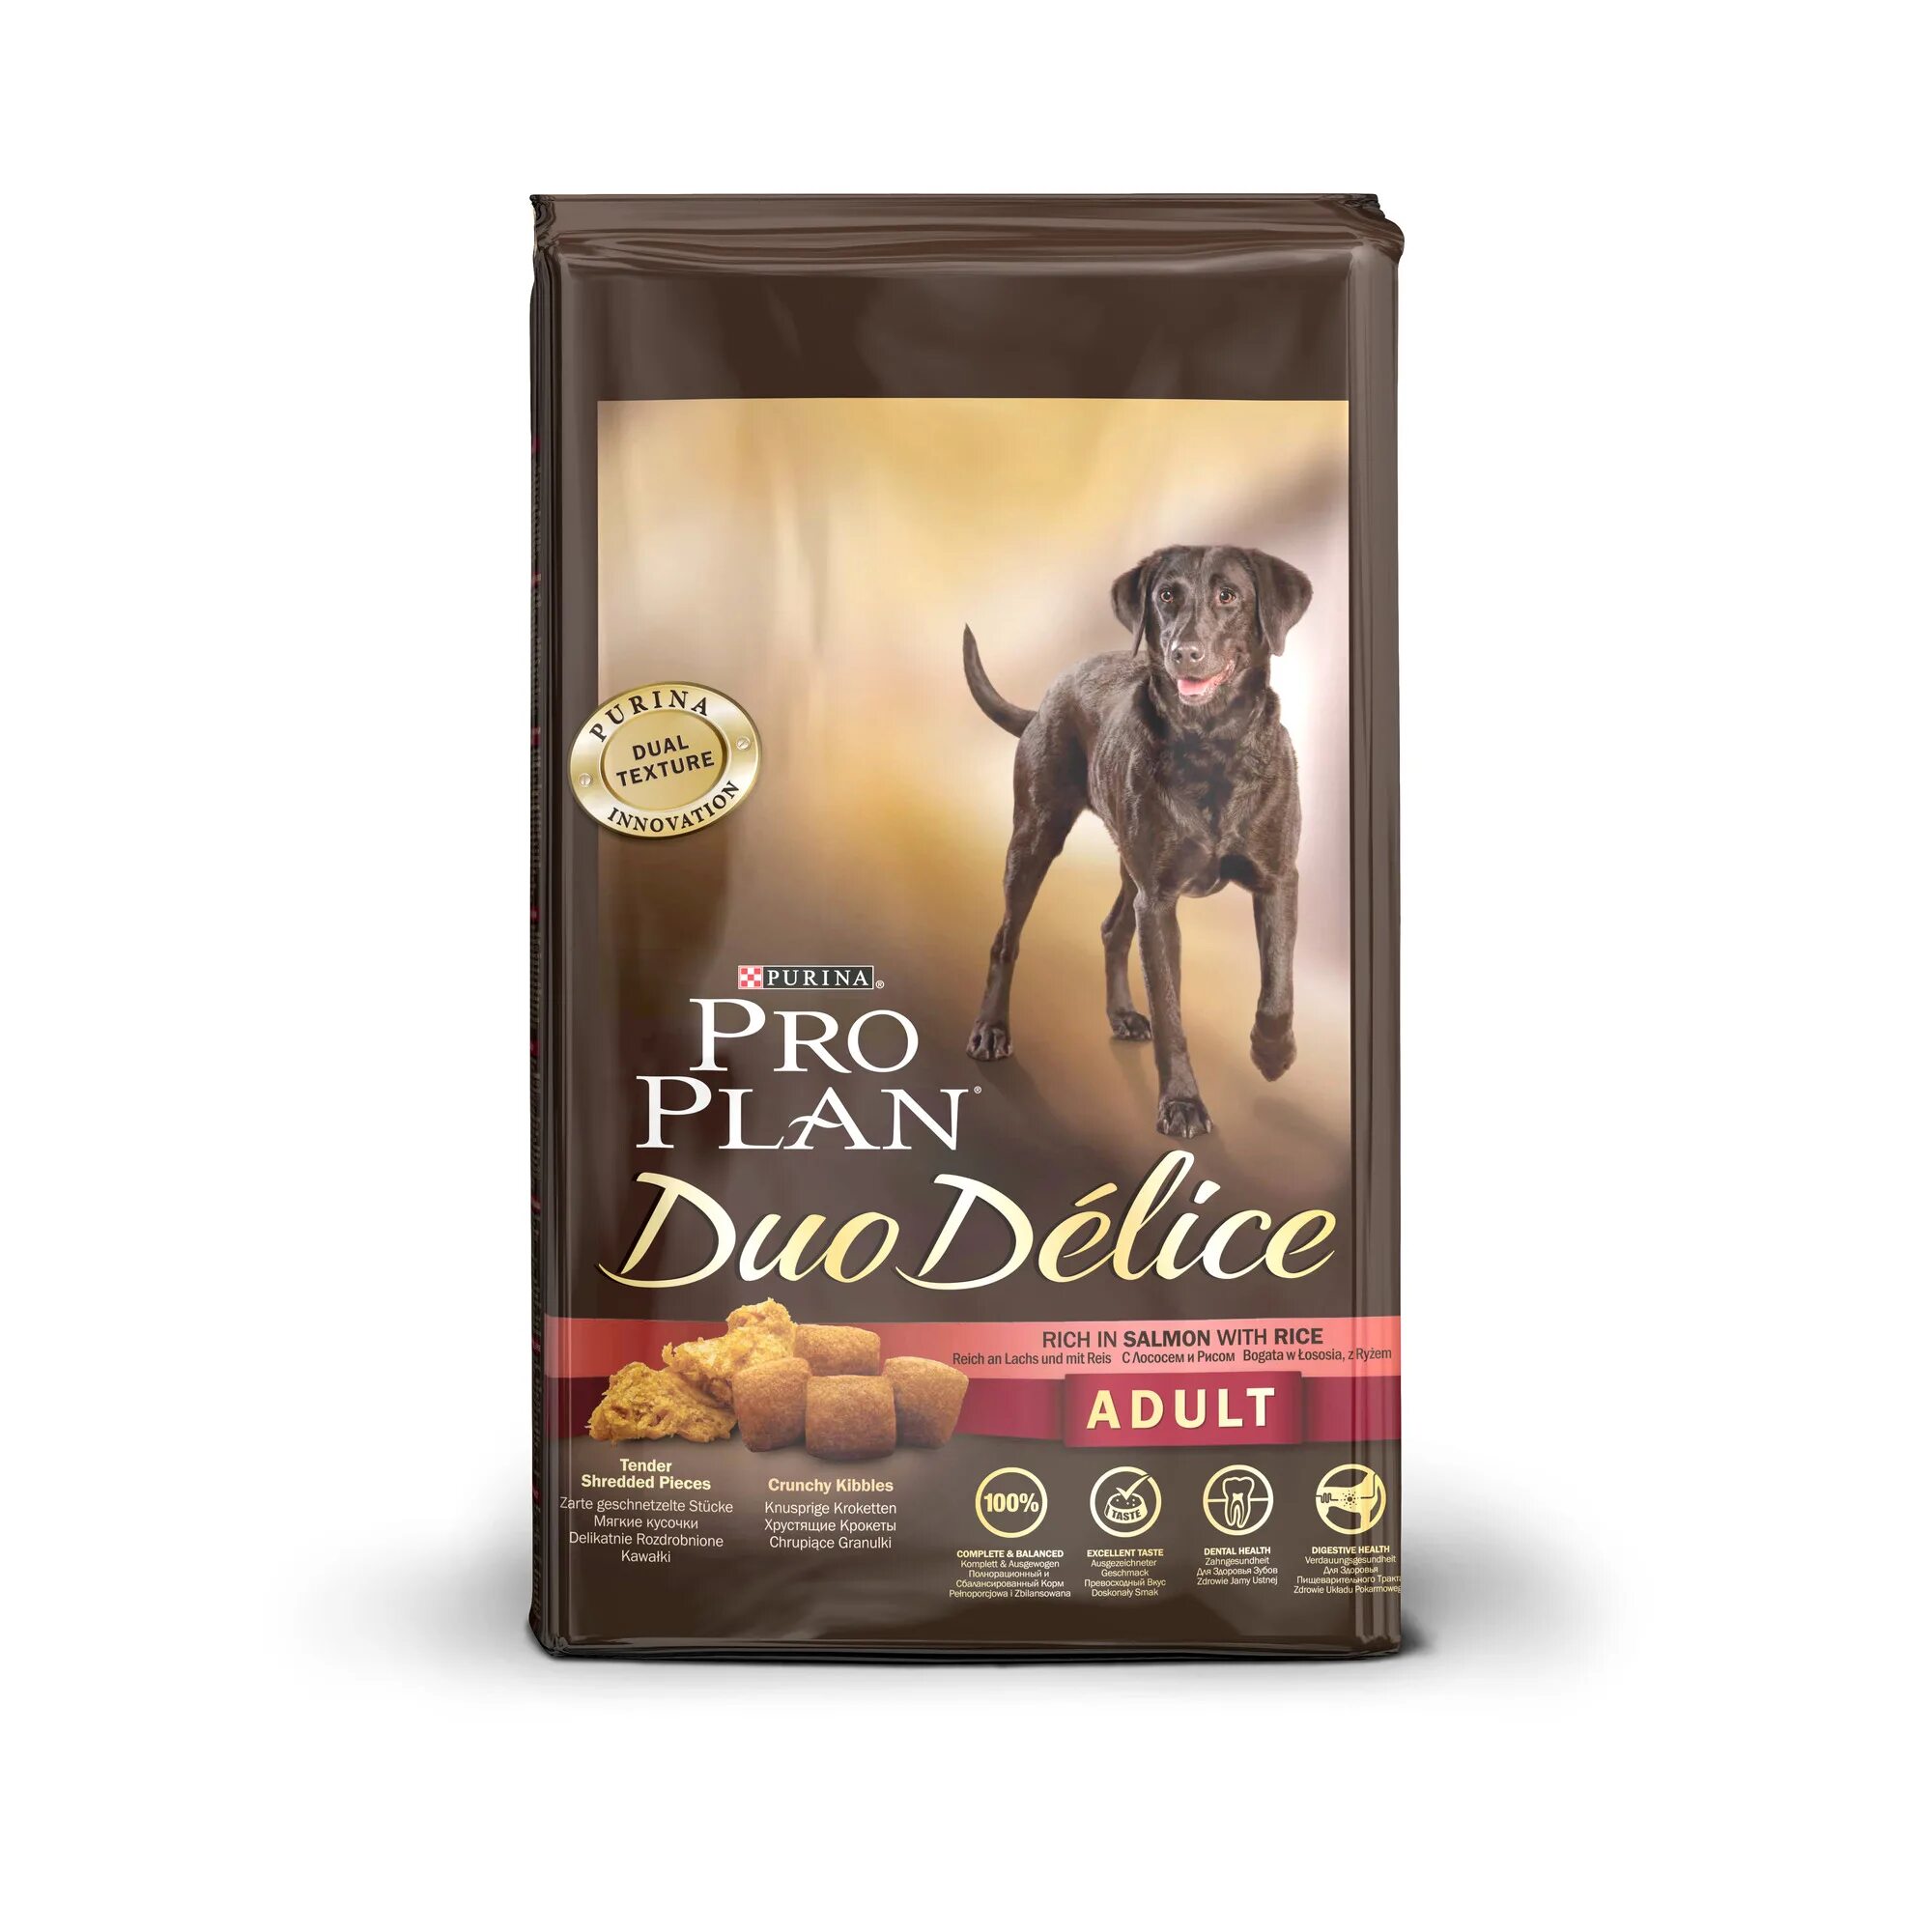 Корм для собак Purina Pro Plan Duo Delice говядина с рисом 2.5 кг. Корм для собак Purina Pro Plan Duo Delice лосось с рисом 10 кг. Корм для собак Purina Pro Plan Duo Delice говядина с рисом 700г. Проплан дуо Делис для собак.